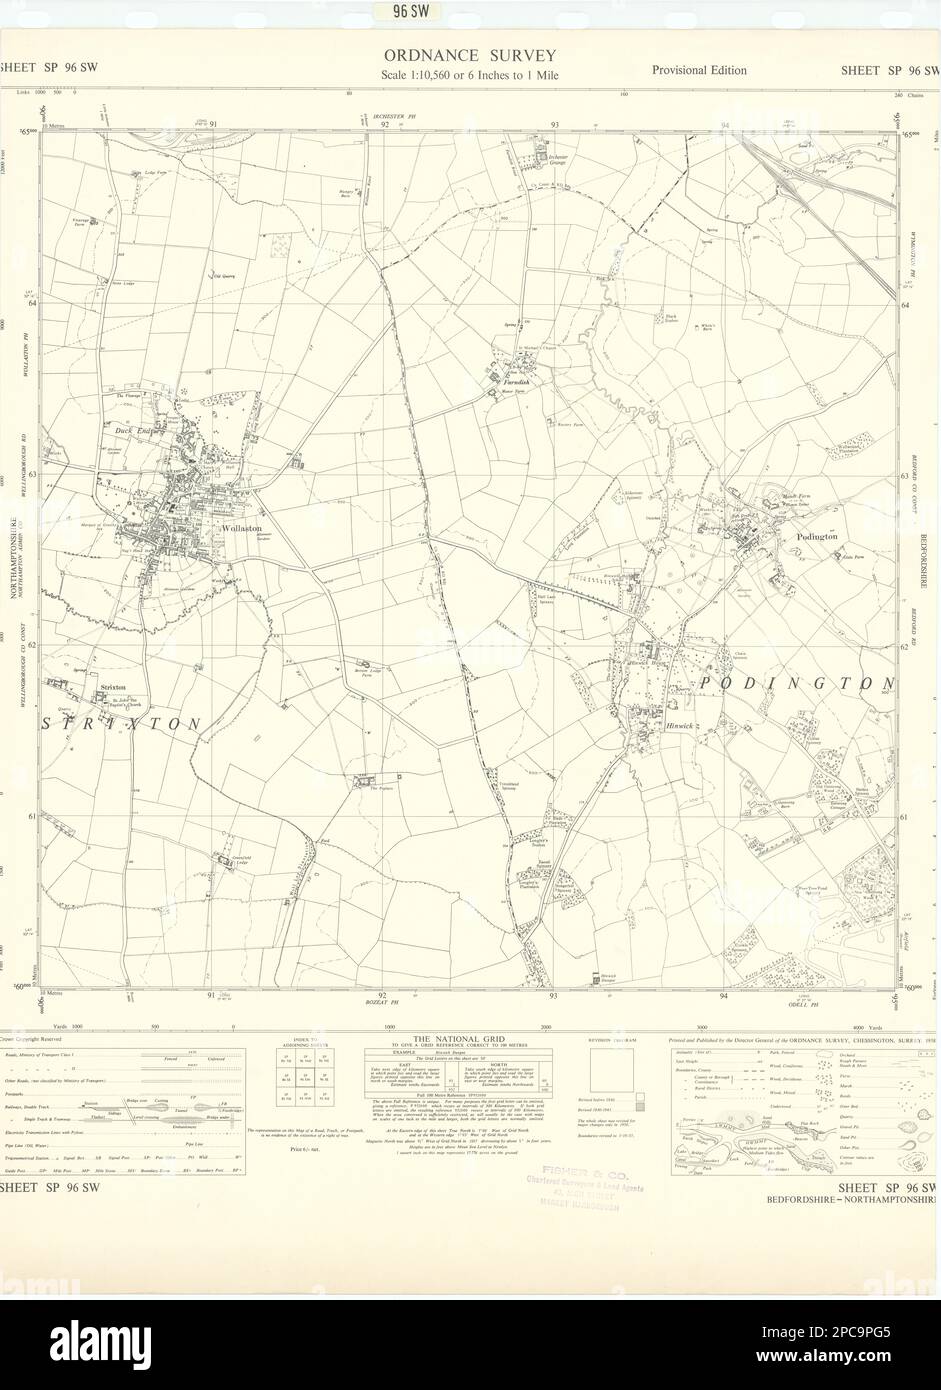 Ordnance Survey SP96SW Northants/Bedfordshire Wollaston Podington 1958 mapa antiguo Foto de stock